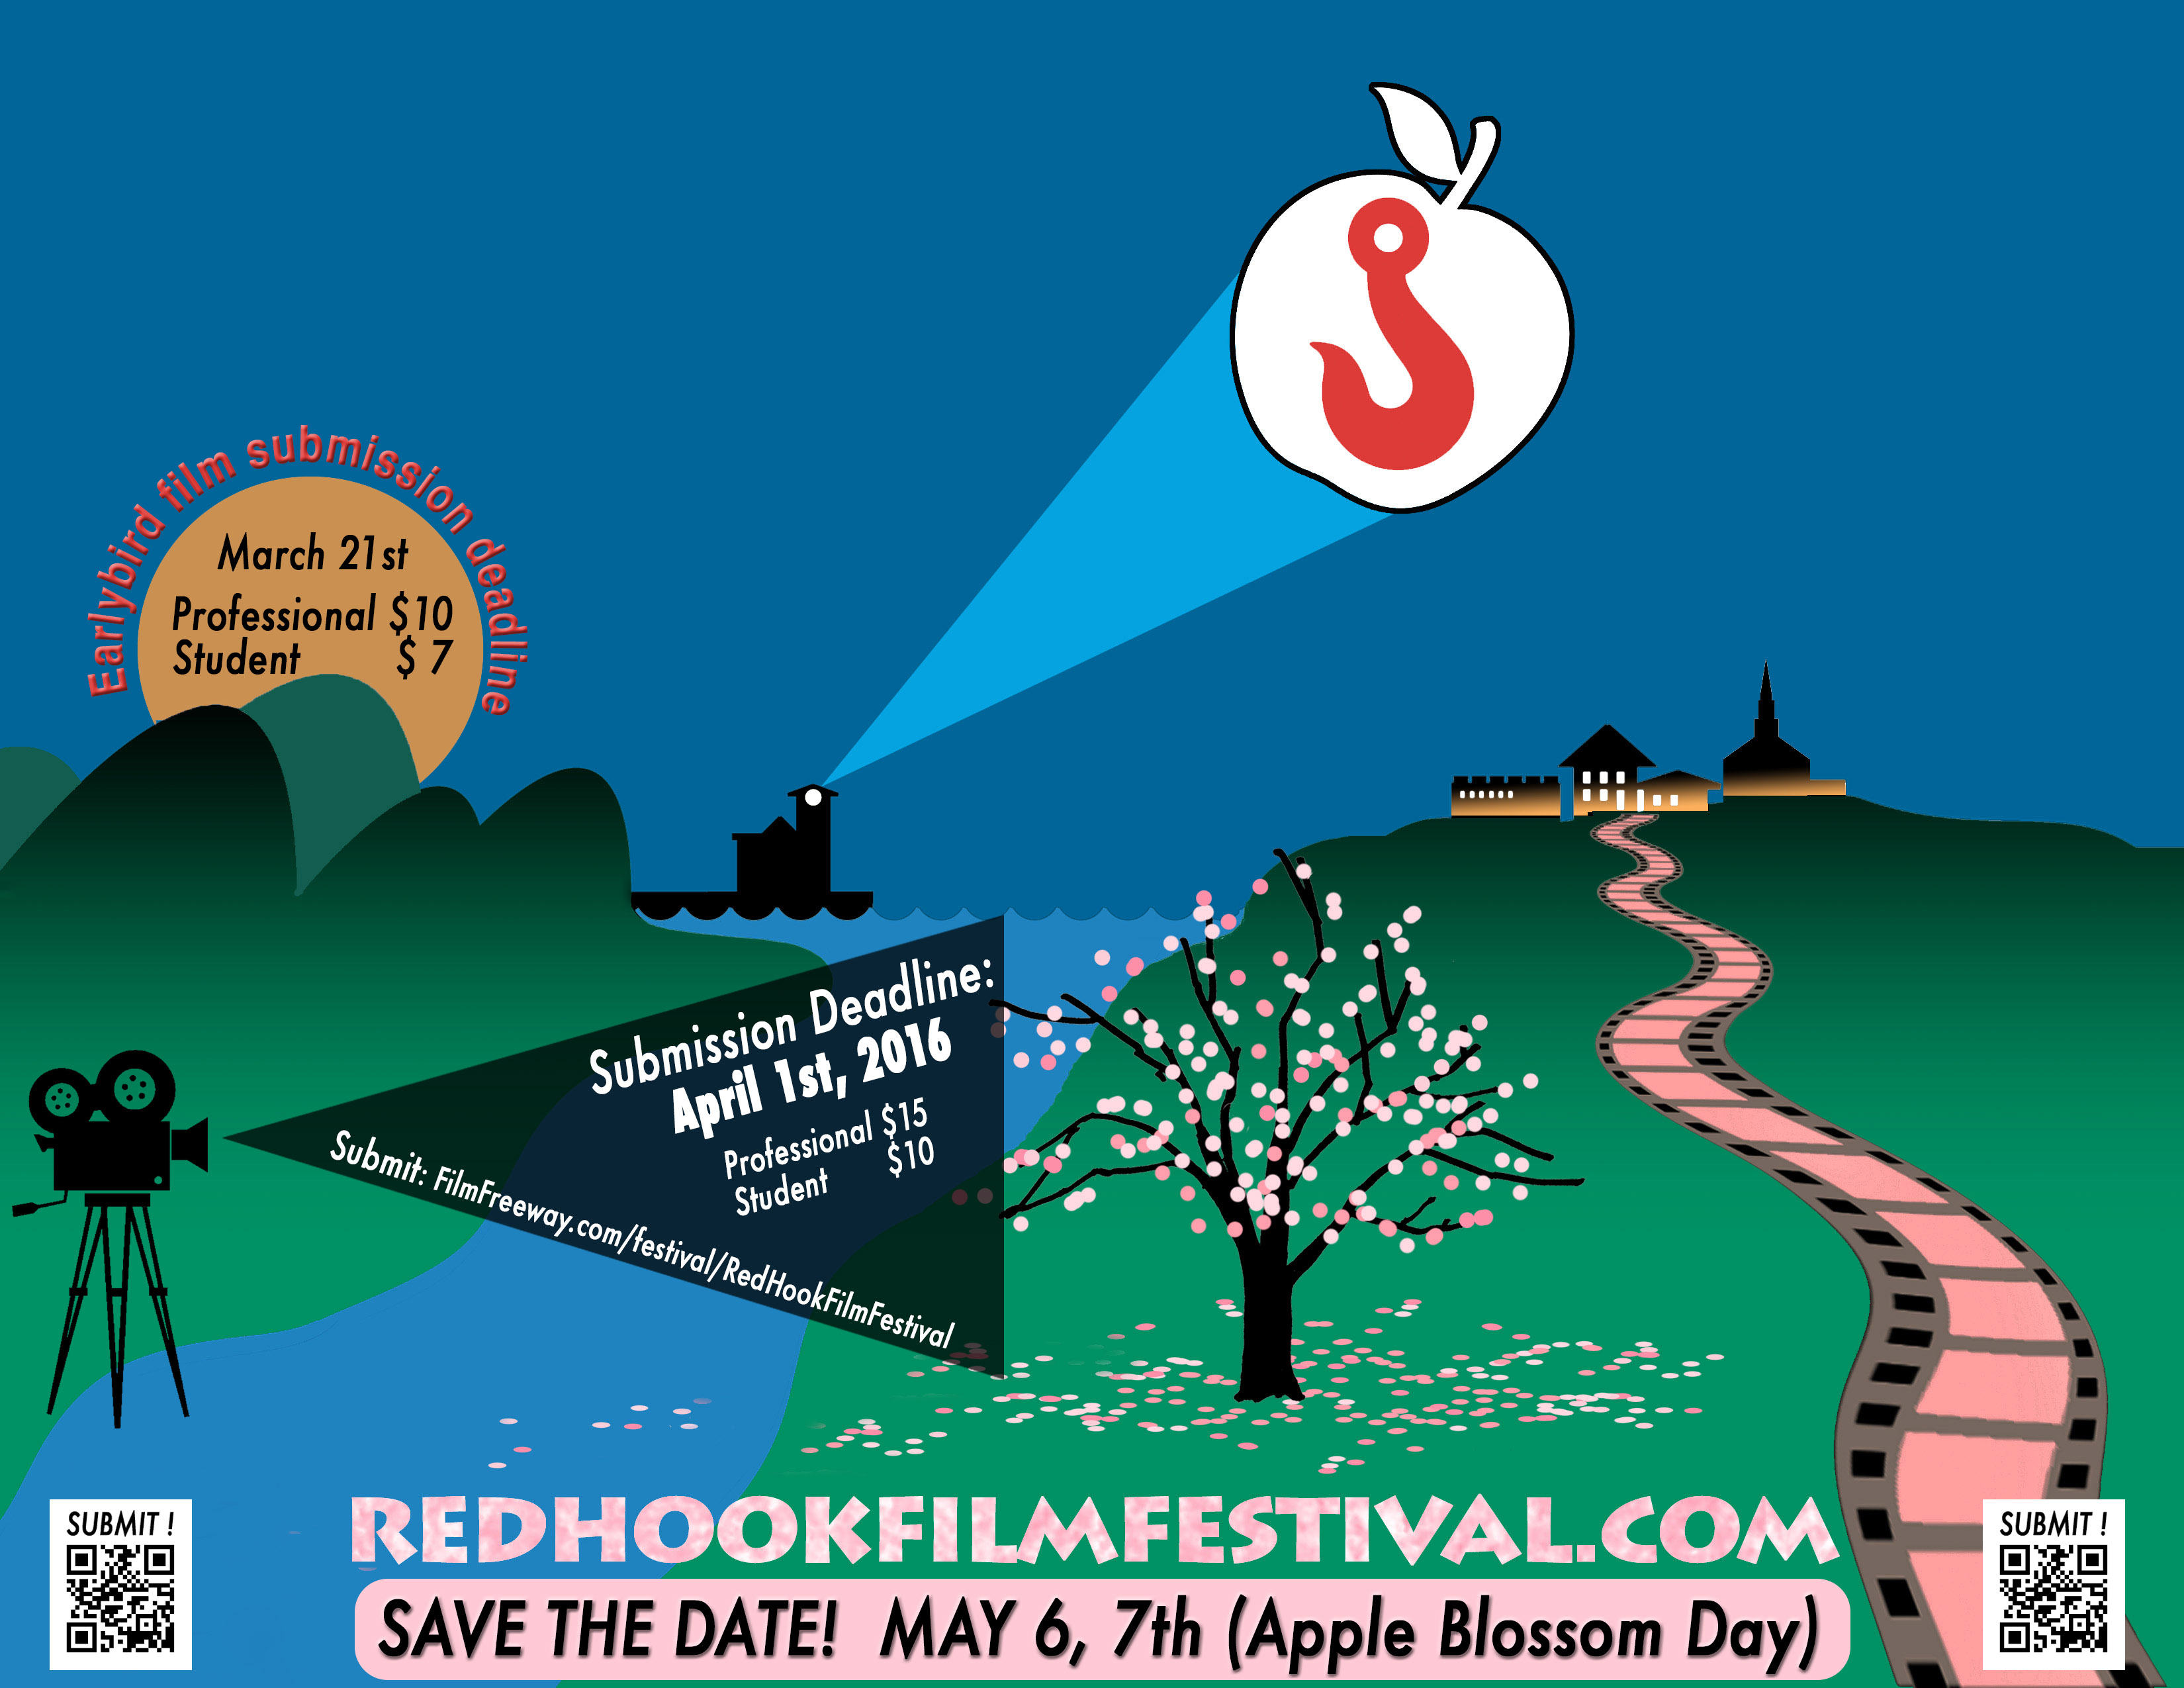 Visit http://www.redhookfilmfestival.com/home.html